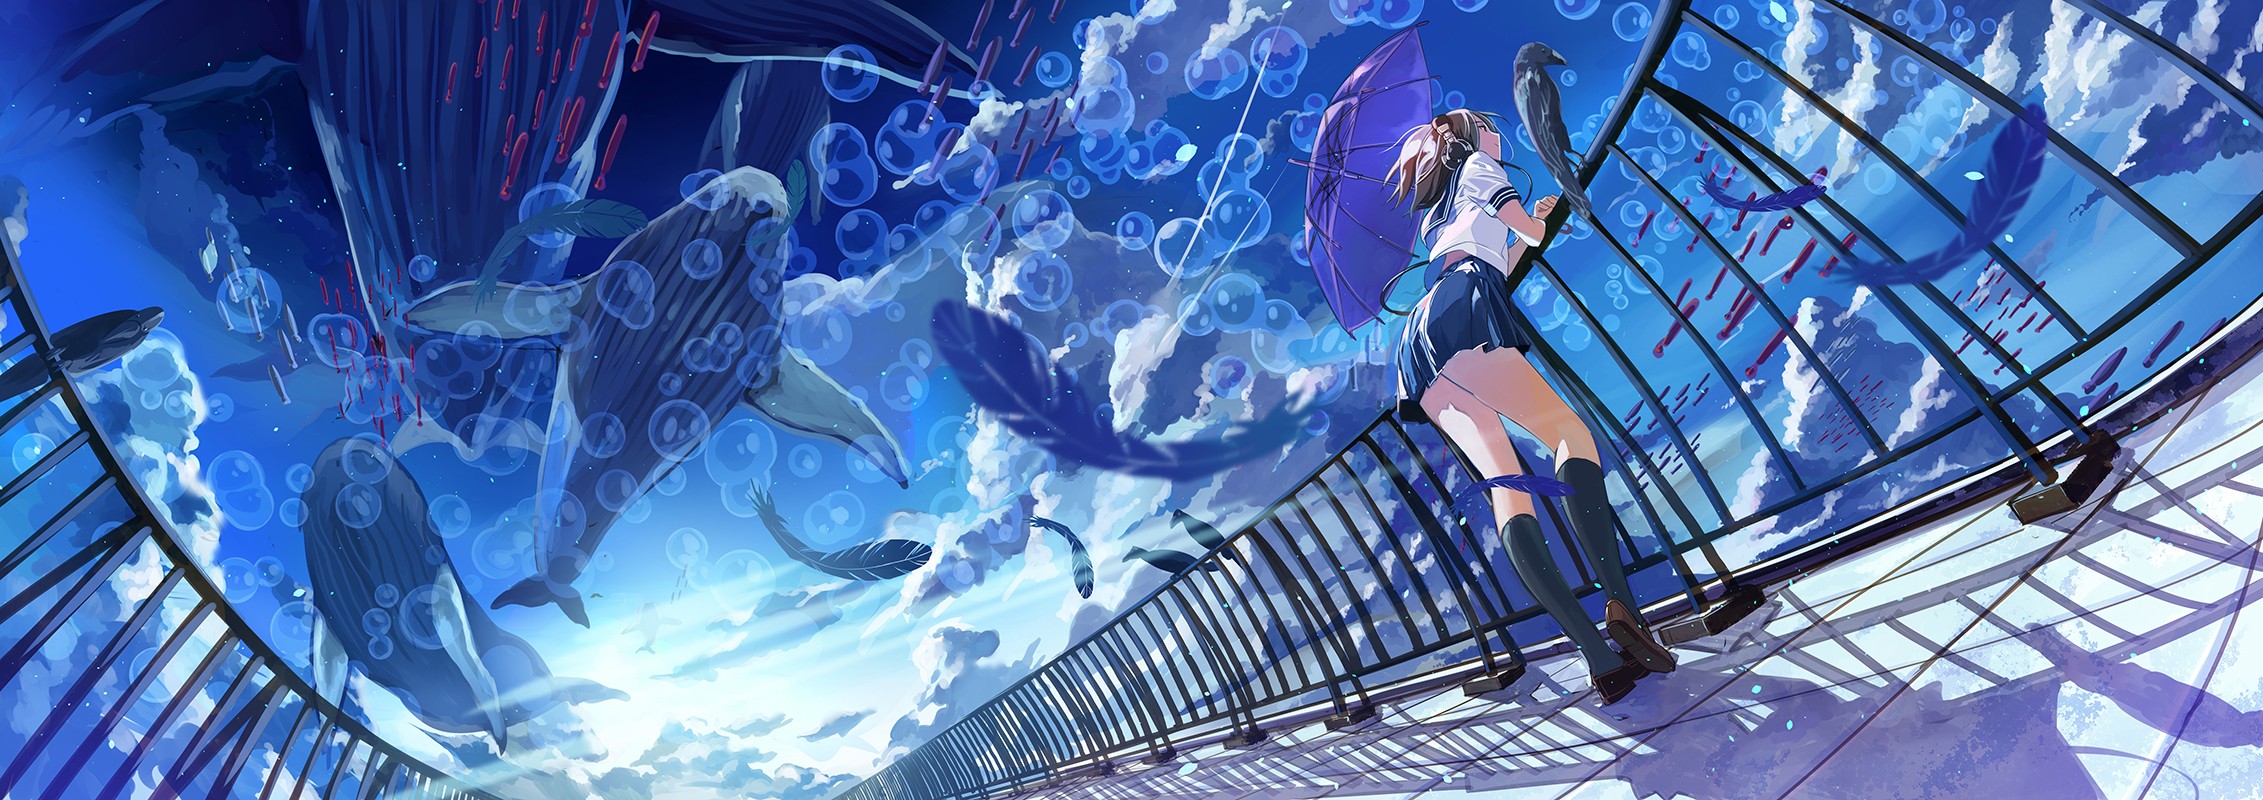 Anime 2263x800 whale bubbles umbrella sky anime girls Fujita legs feathers birds mammals